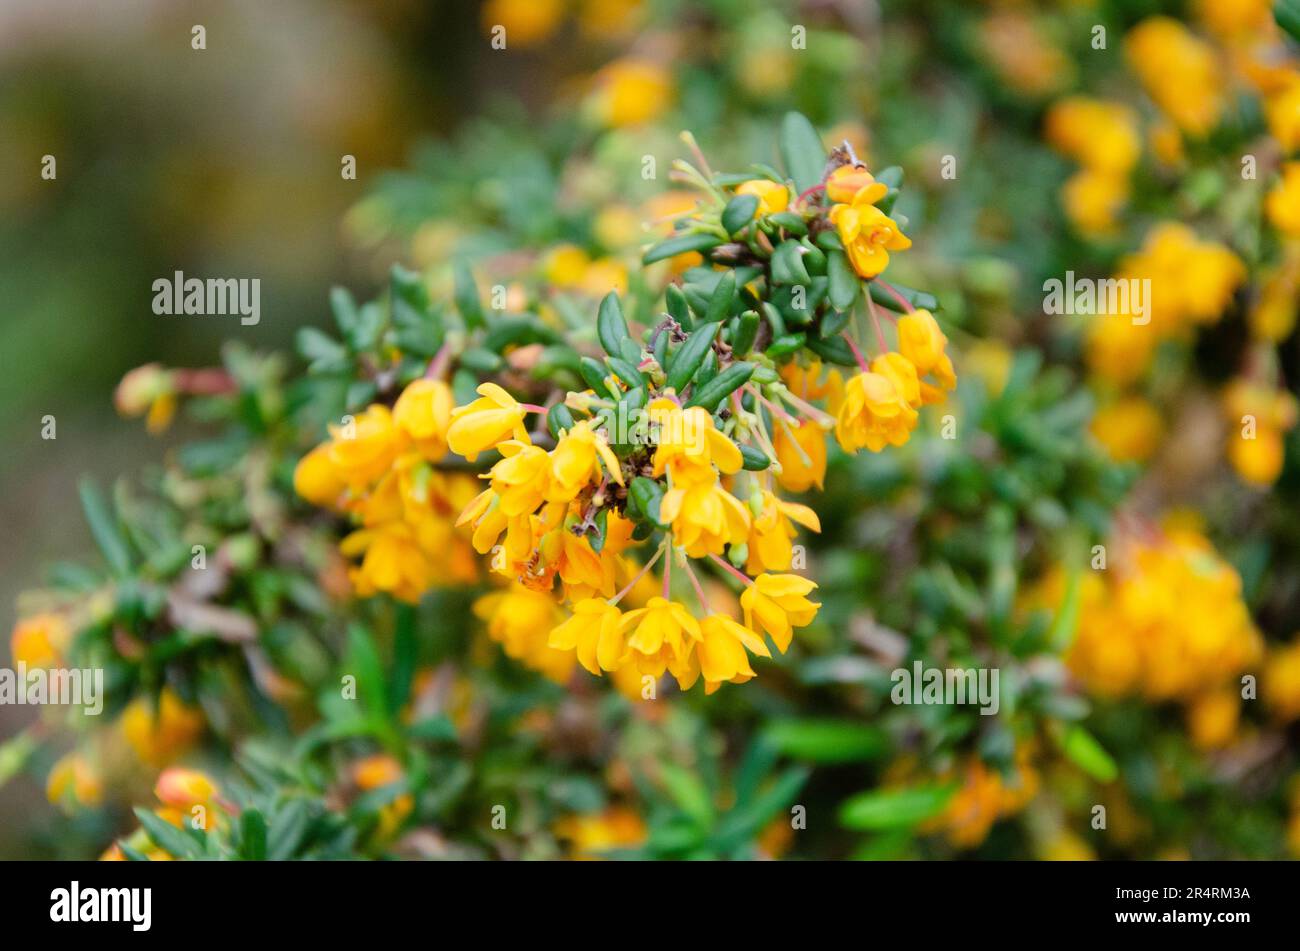 Close up image of Darwins barberry flowers, Berberis darwinii Stock Photo